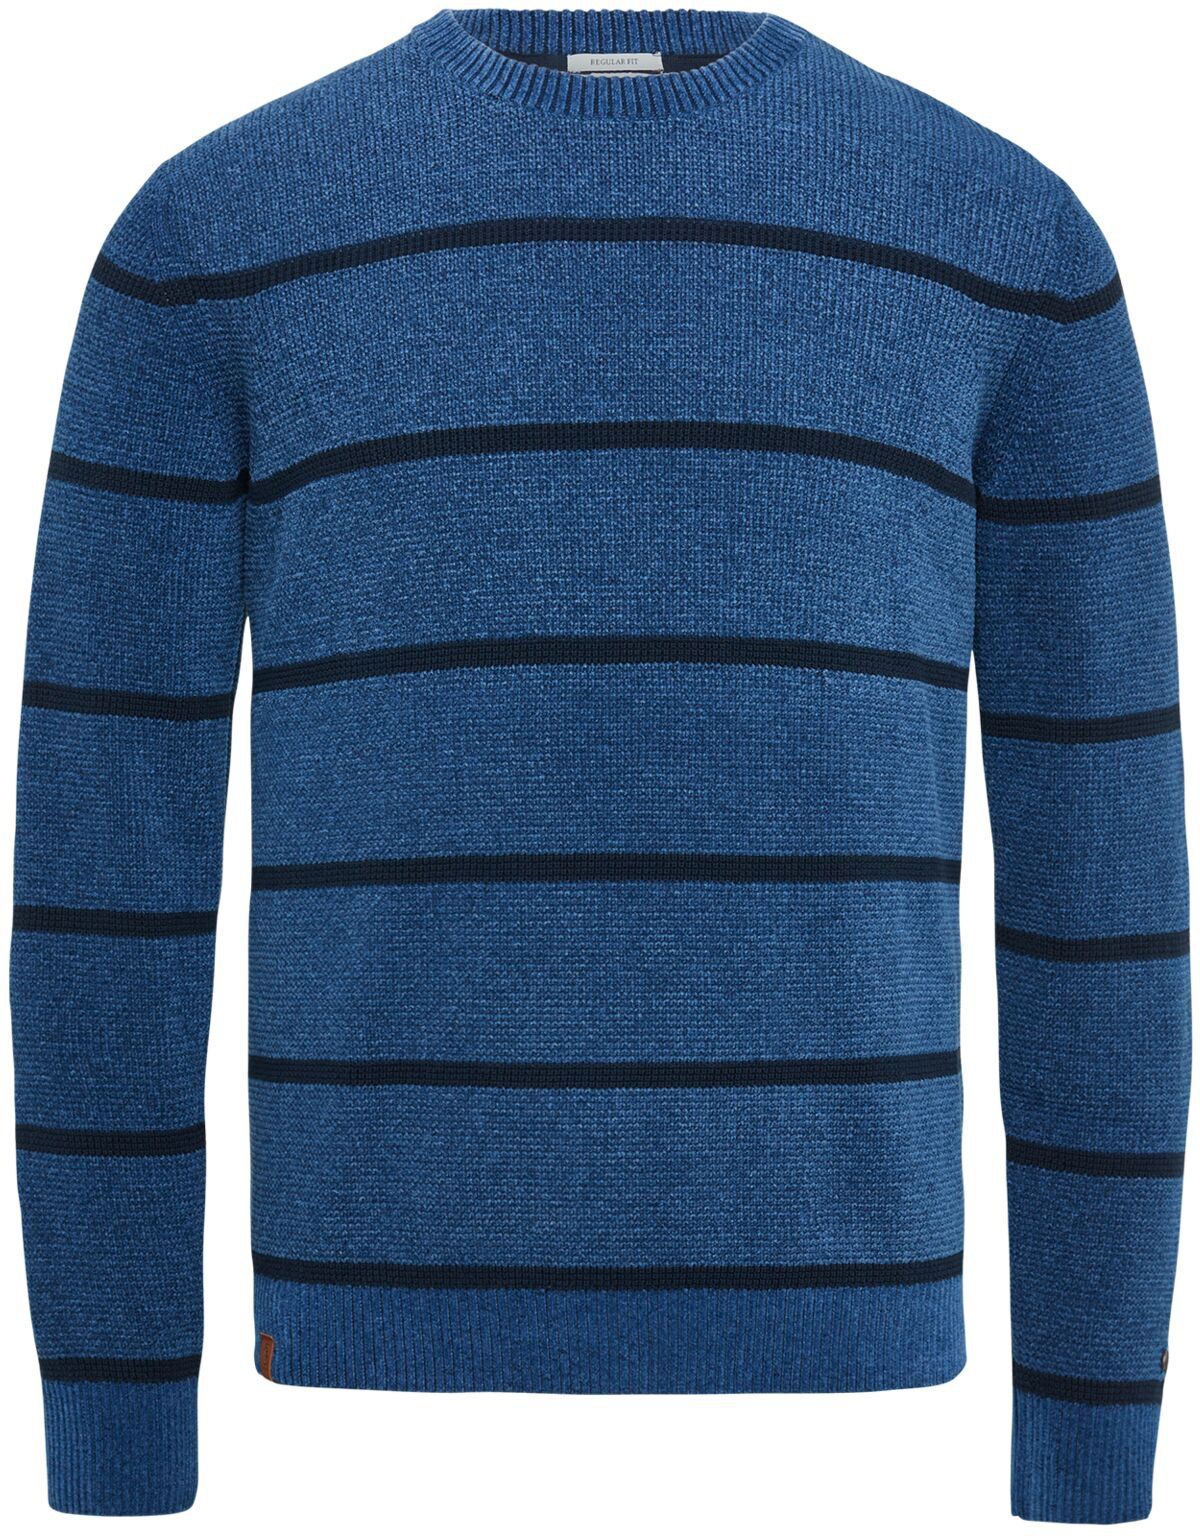 Cast Iron Sweater Striped Dark Dark Blue Blue size L